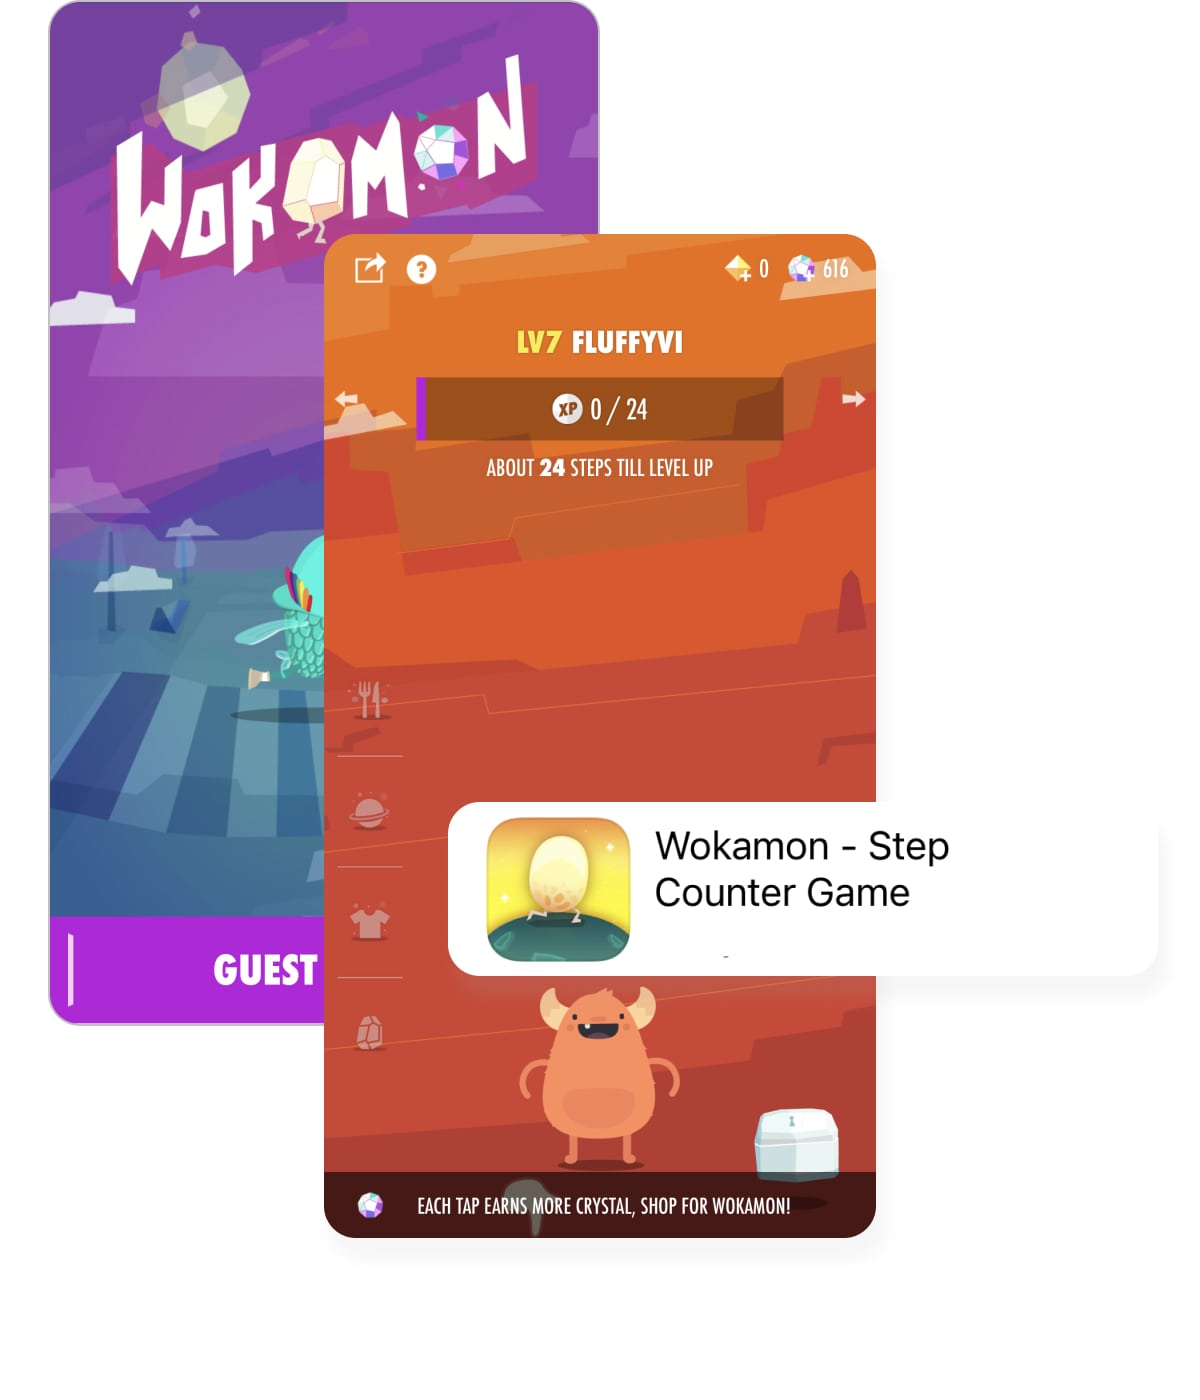 Wokamon fitness app - step counter game